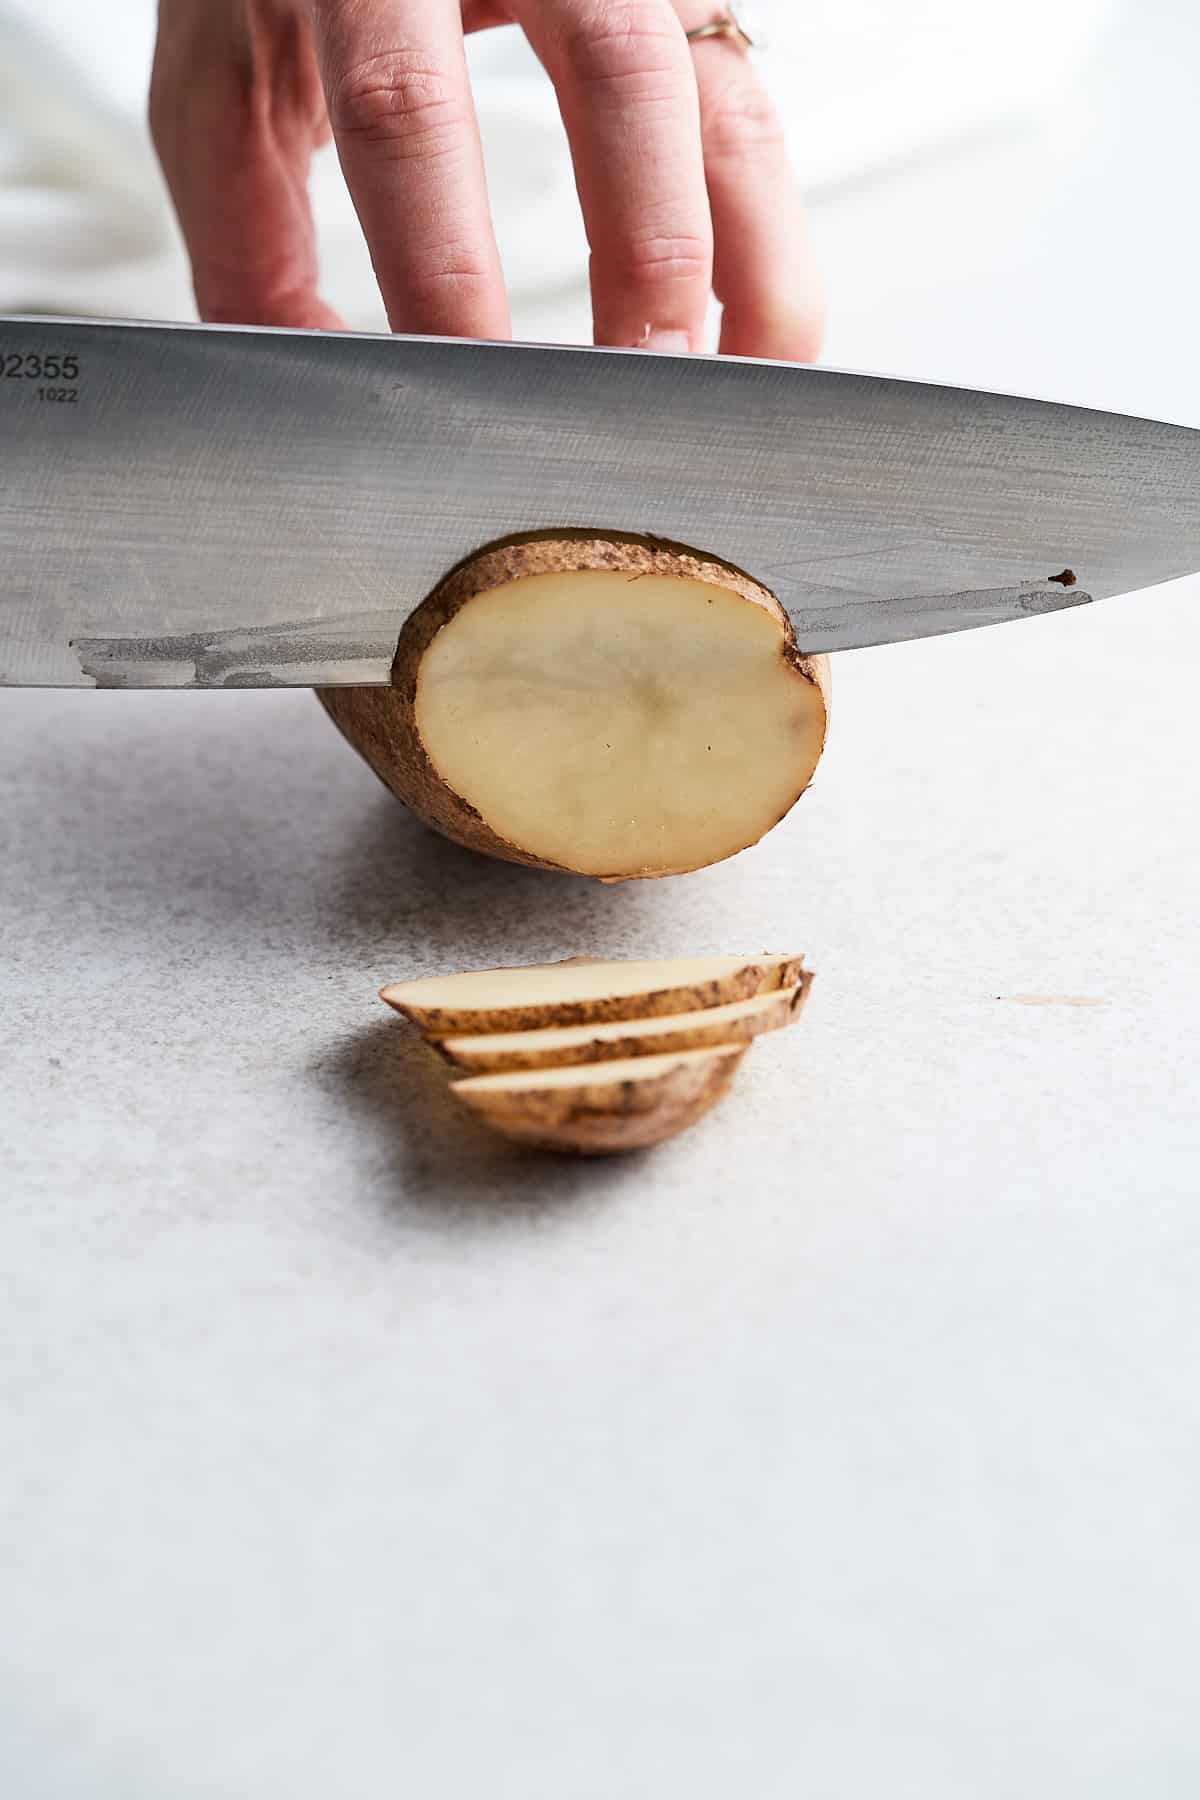 Slicing a potato into chips.